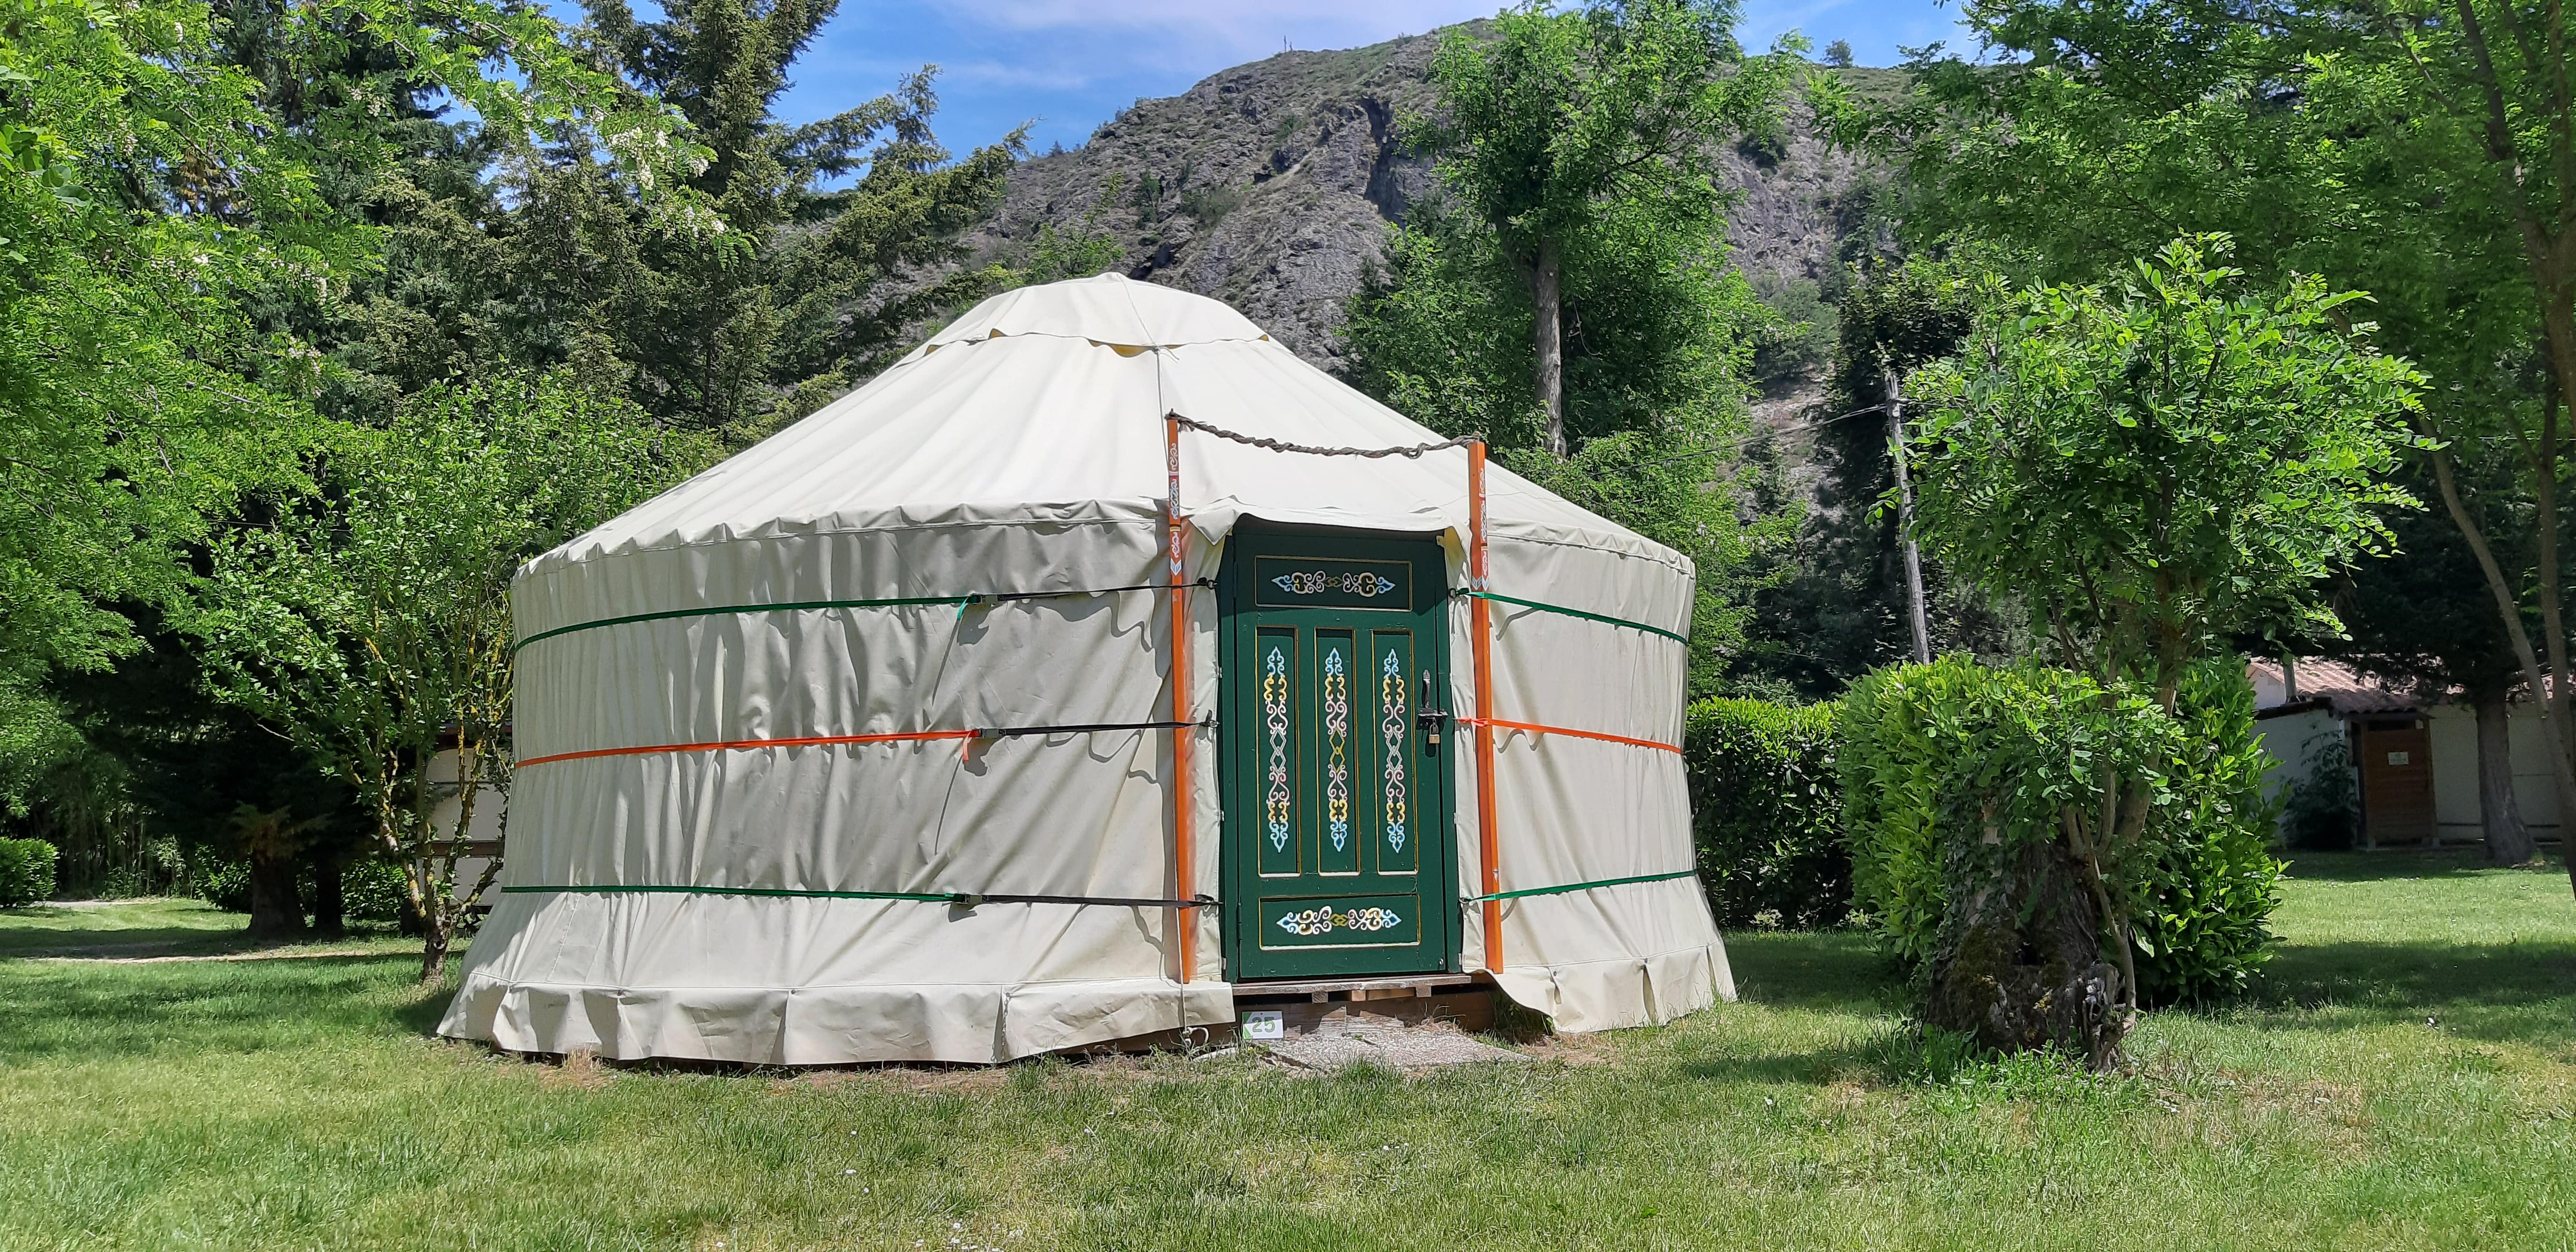 Huuraccommodatie - Yurt Tent - Camping le Viaduc